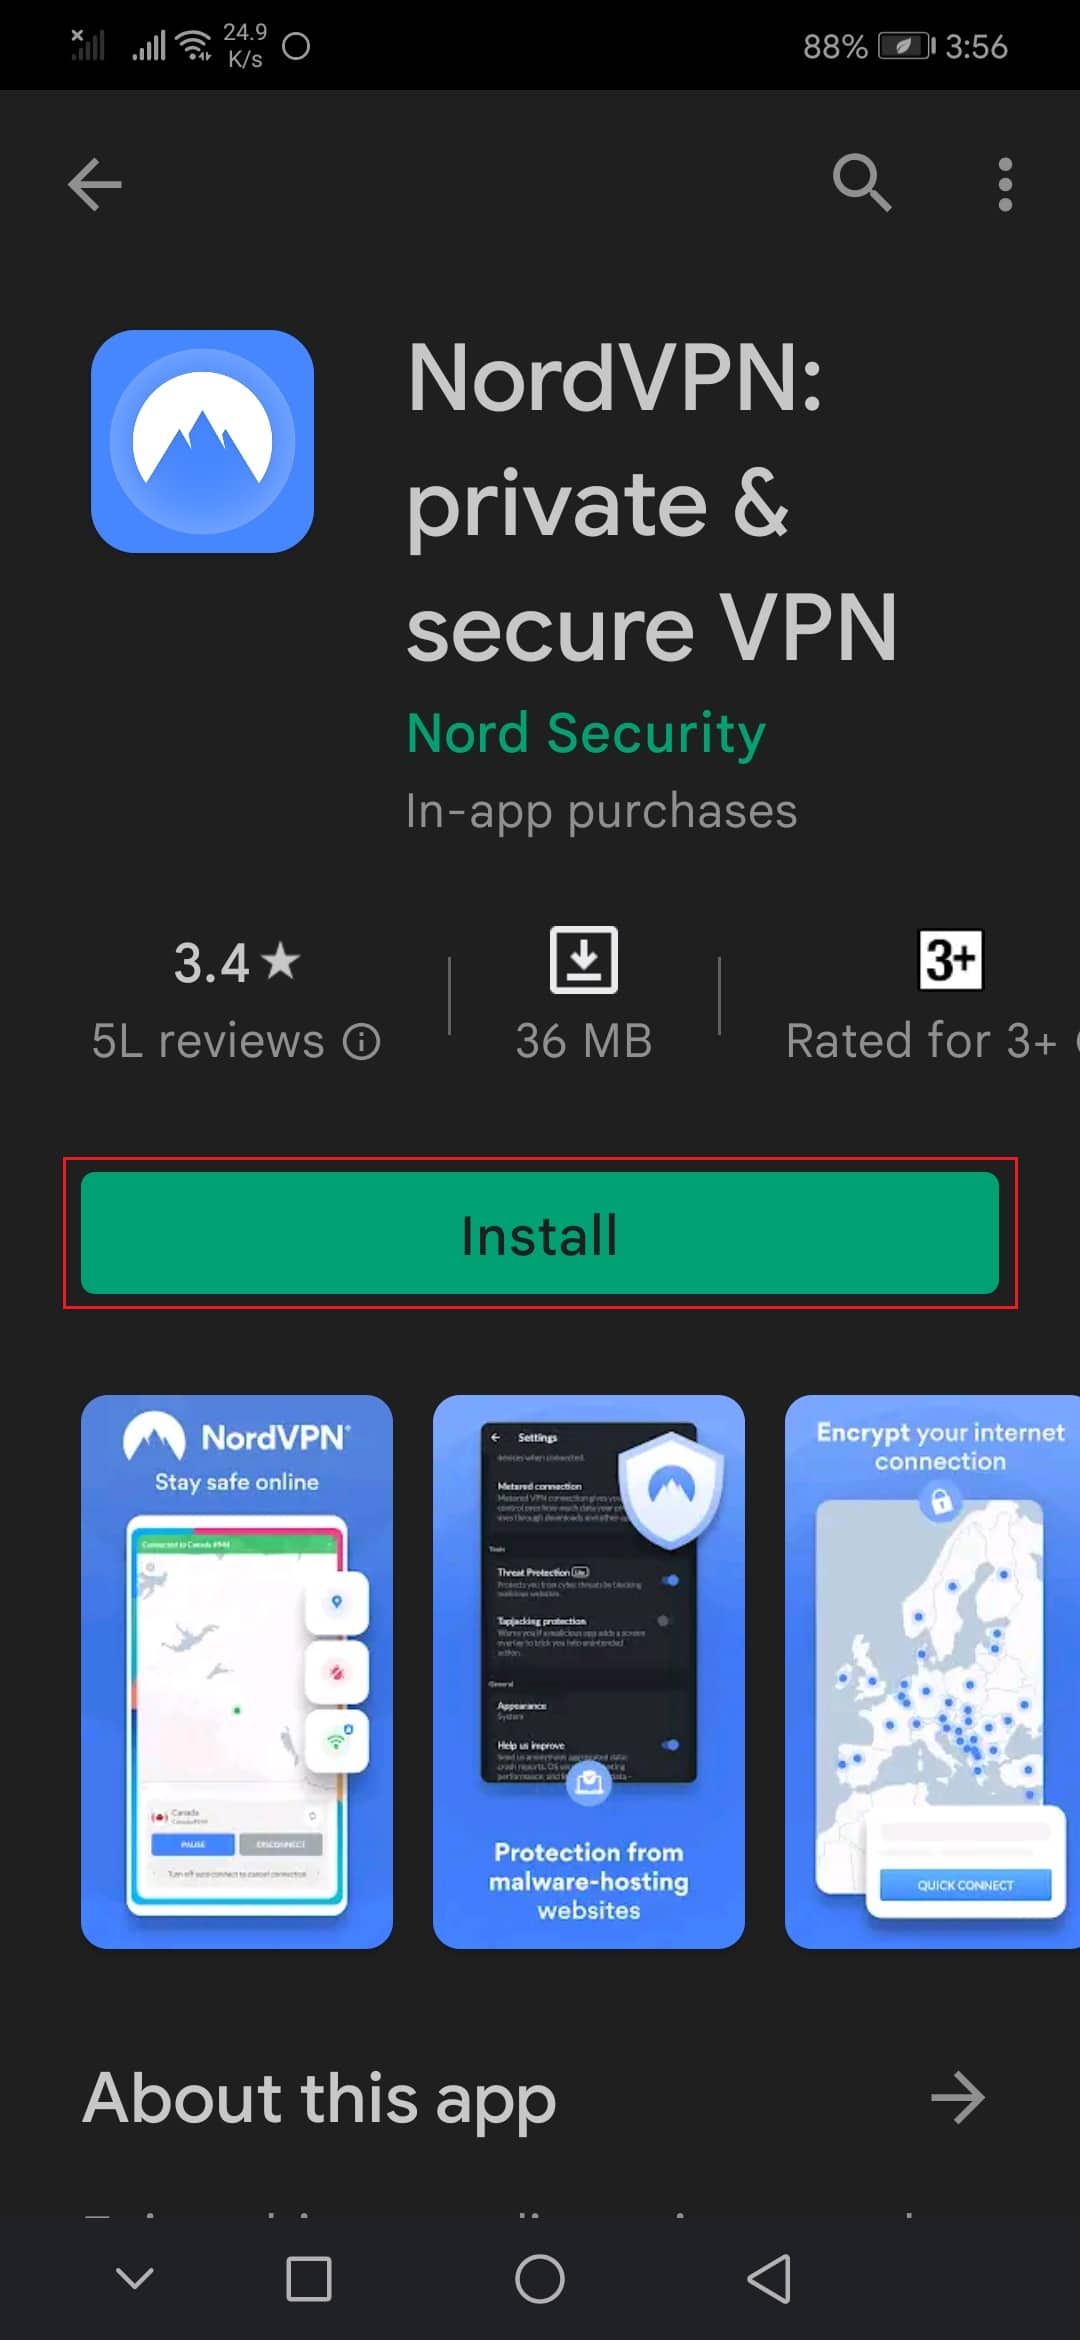 nordVPN android app playstore. Fix Google Play Store Error Code 403